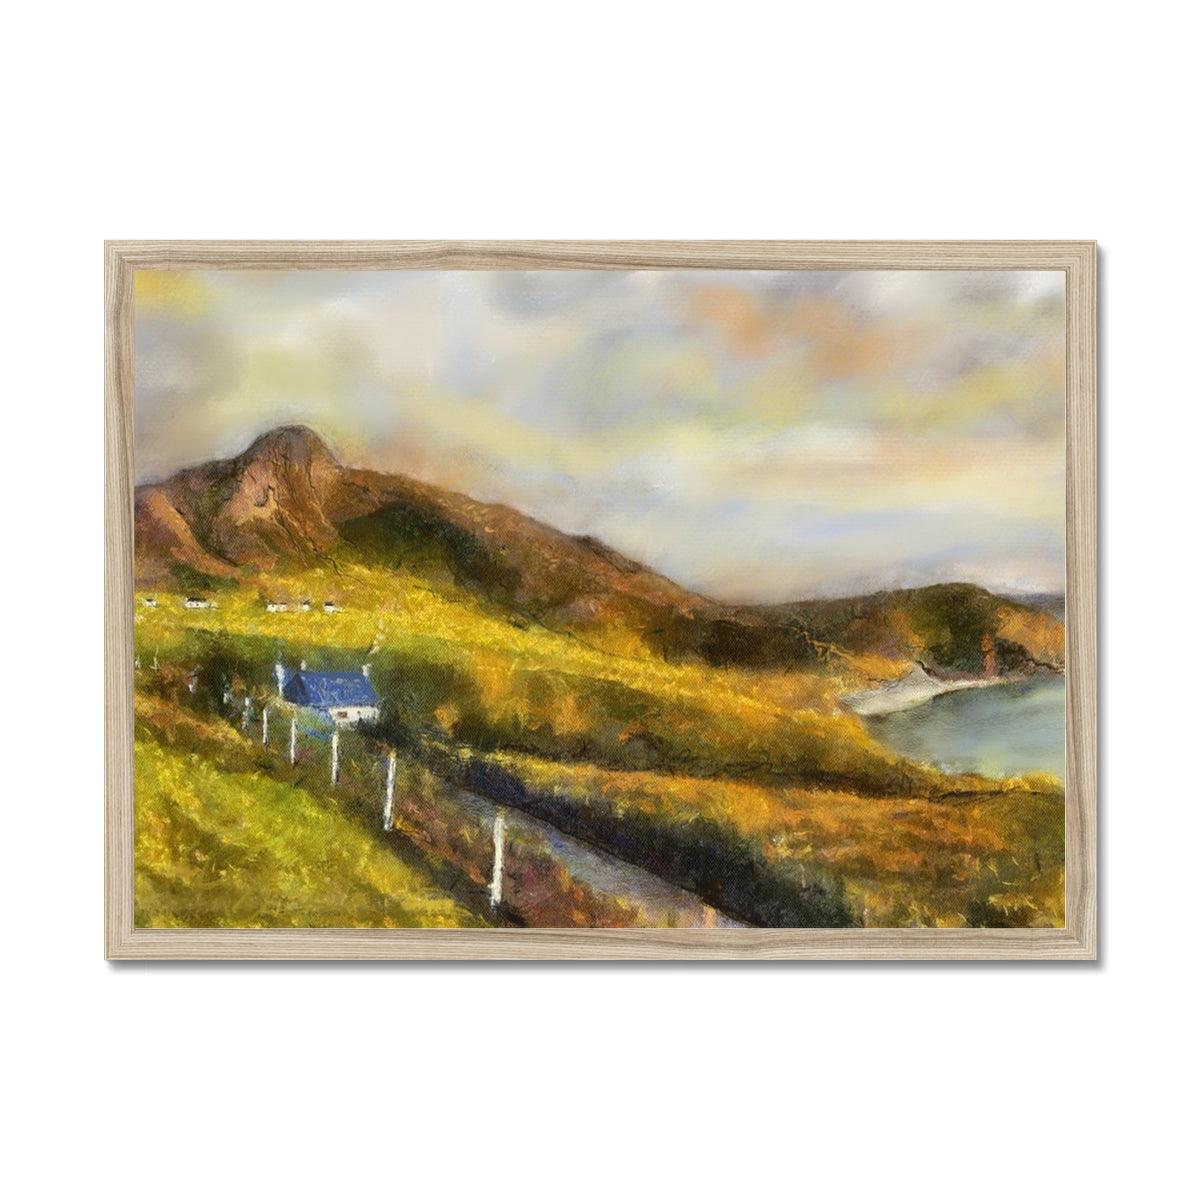 Coldbackie Painting | Framed Prints From Scotland-Framed Prints-Scottish Highlands & Lowlands Art Gallery-A2 Landscape-Natural Frame-Paintings, Prints, Homeware, Art Gifts From Scotland By Scottish Artist Kevin Hunter